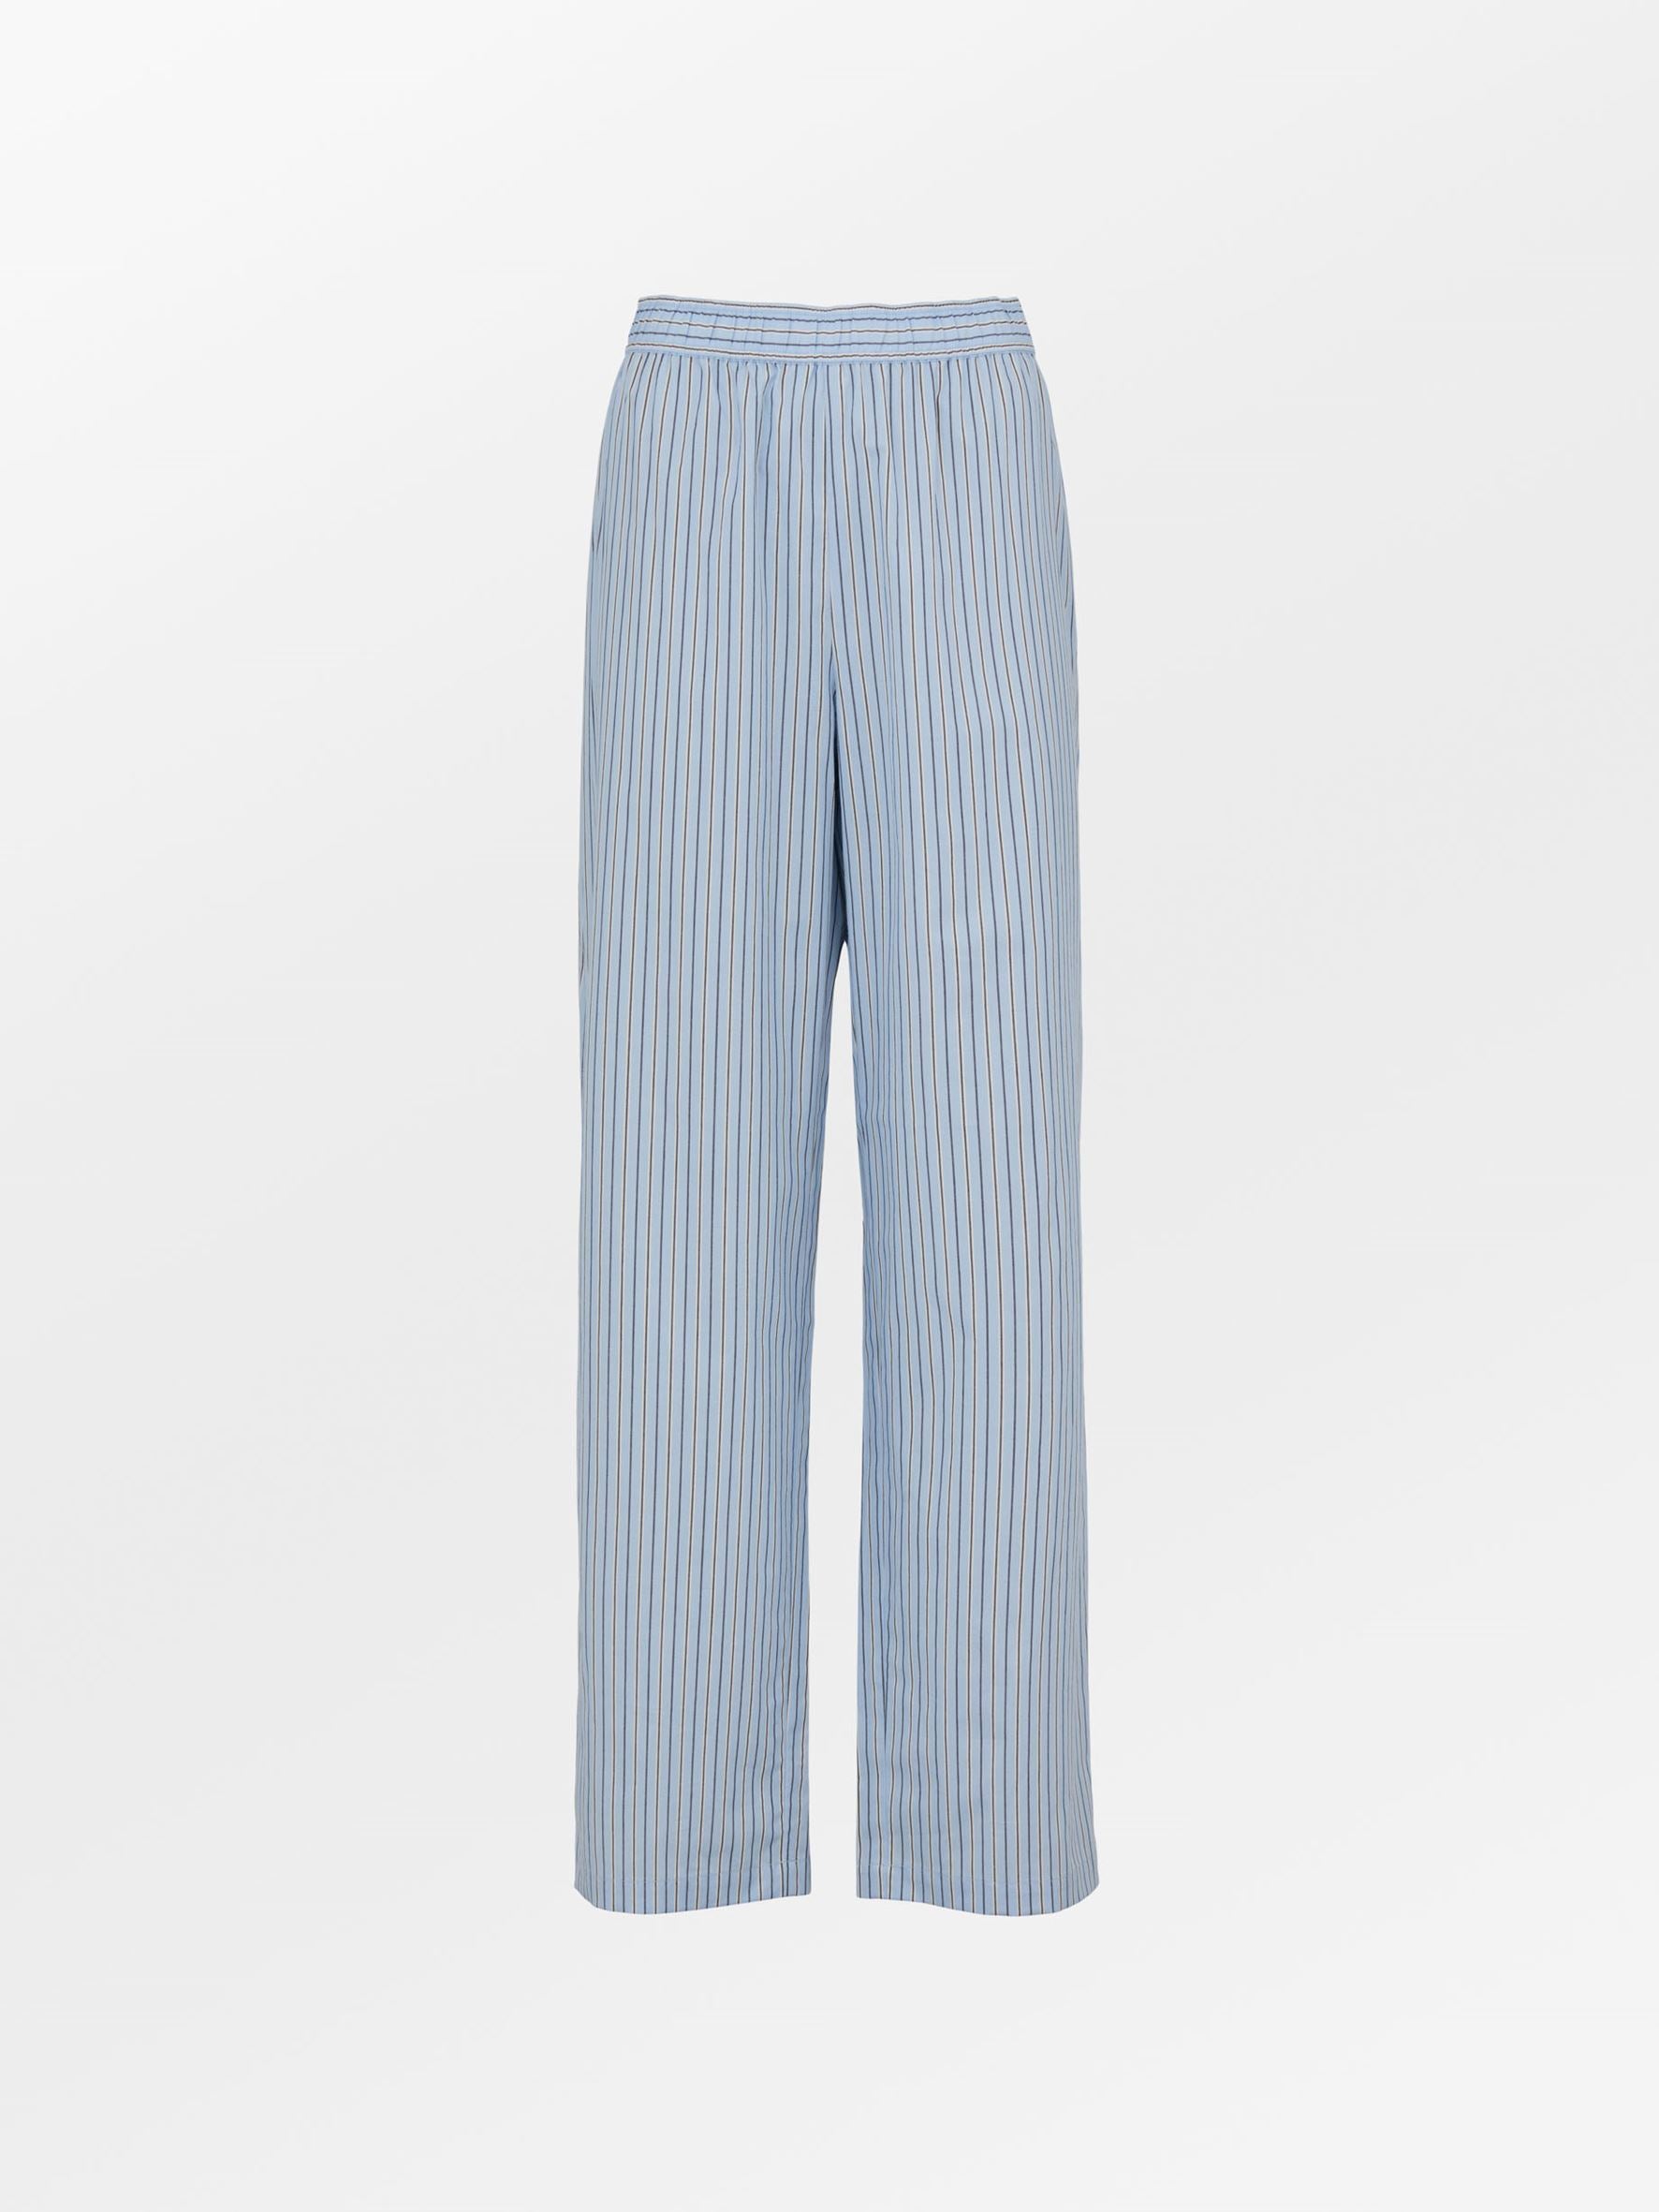 Stripel Pants - Blue Sky Clothing   BeckSöndergaard.no